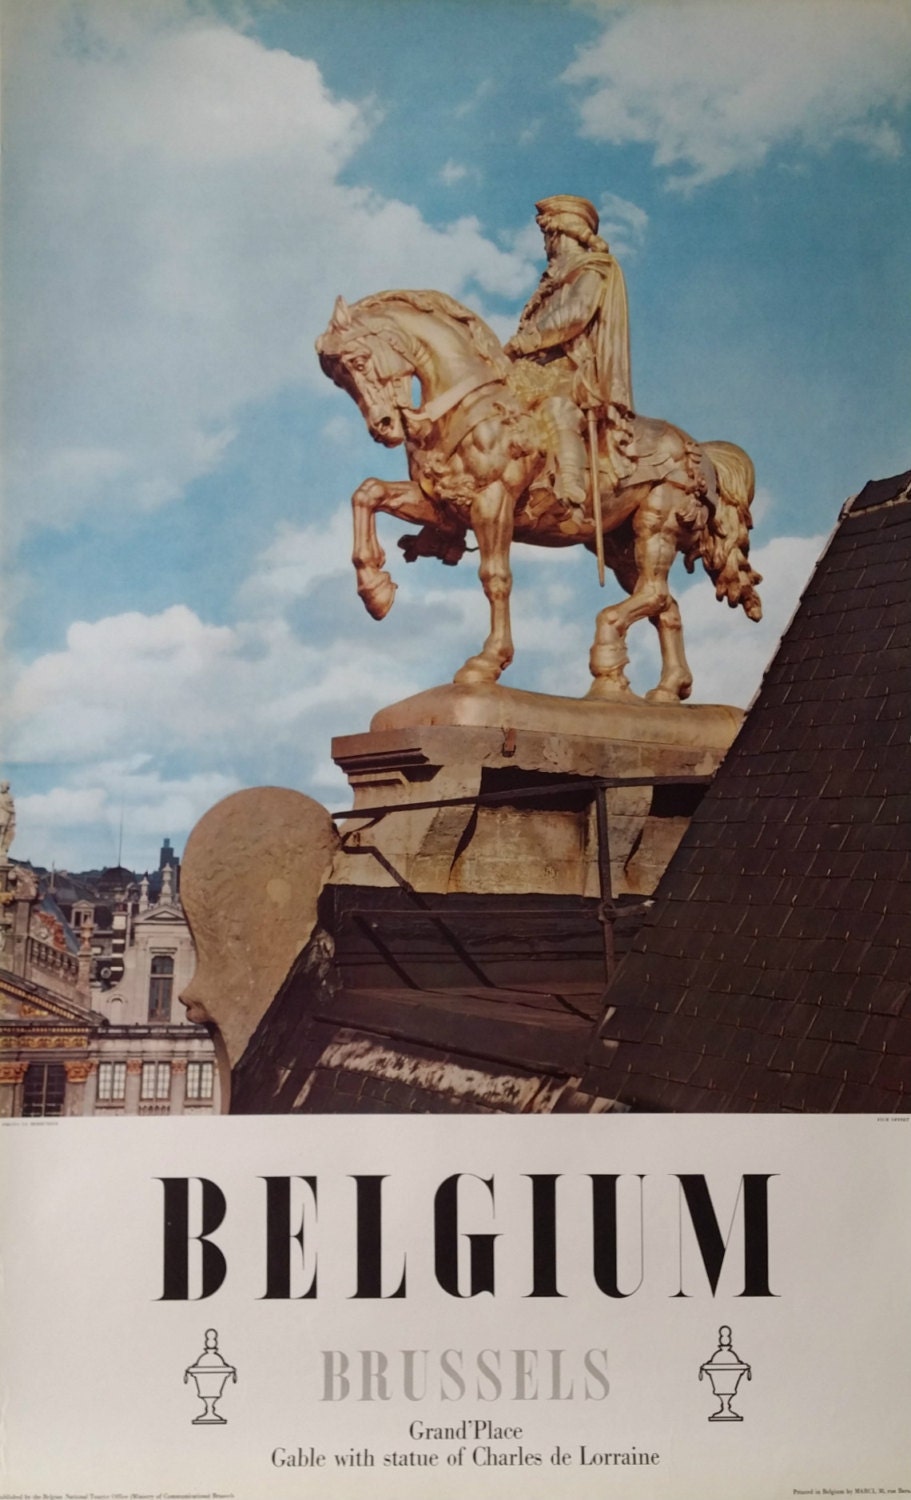 1950s Brussels, Belgium Travel Poster - Original Vintage Poster